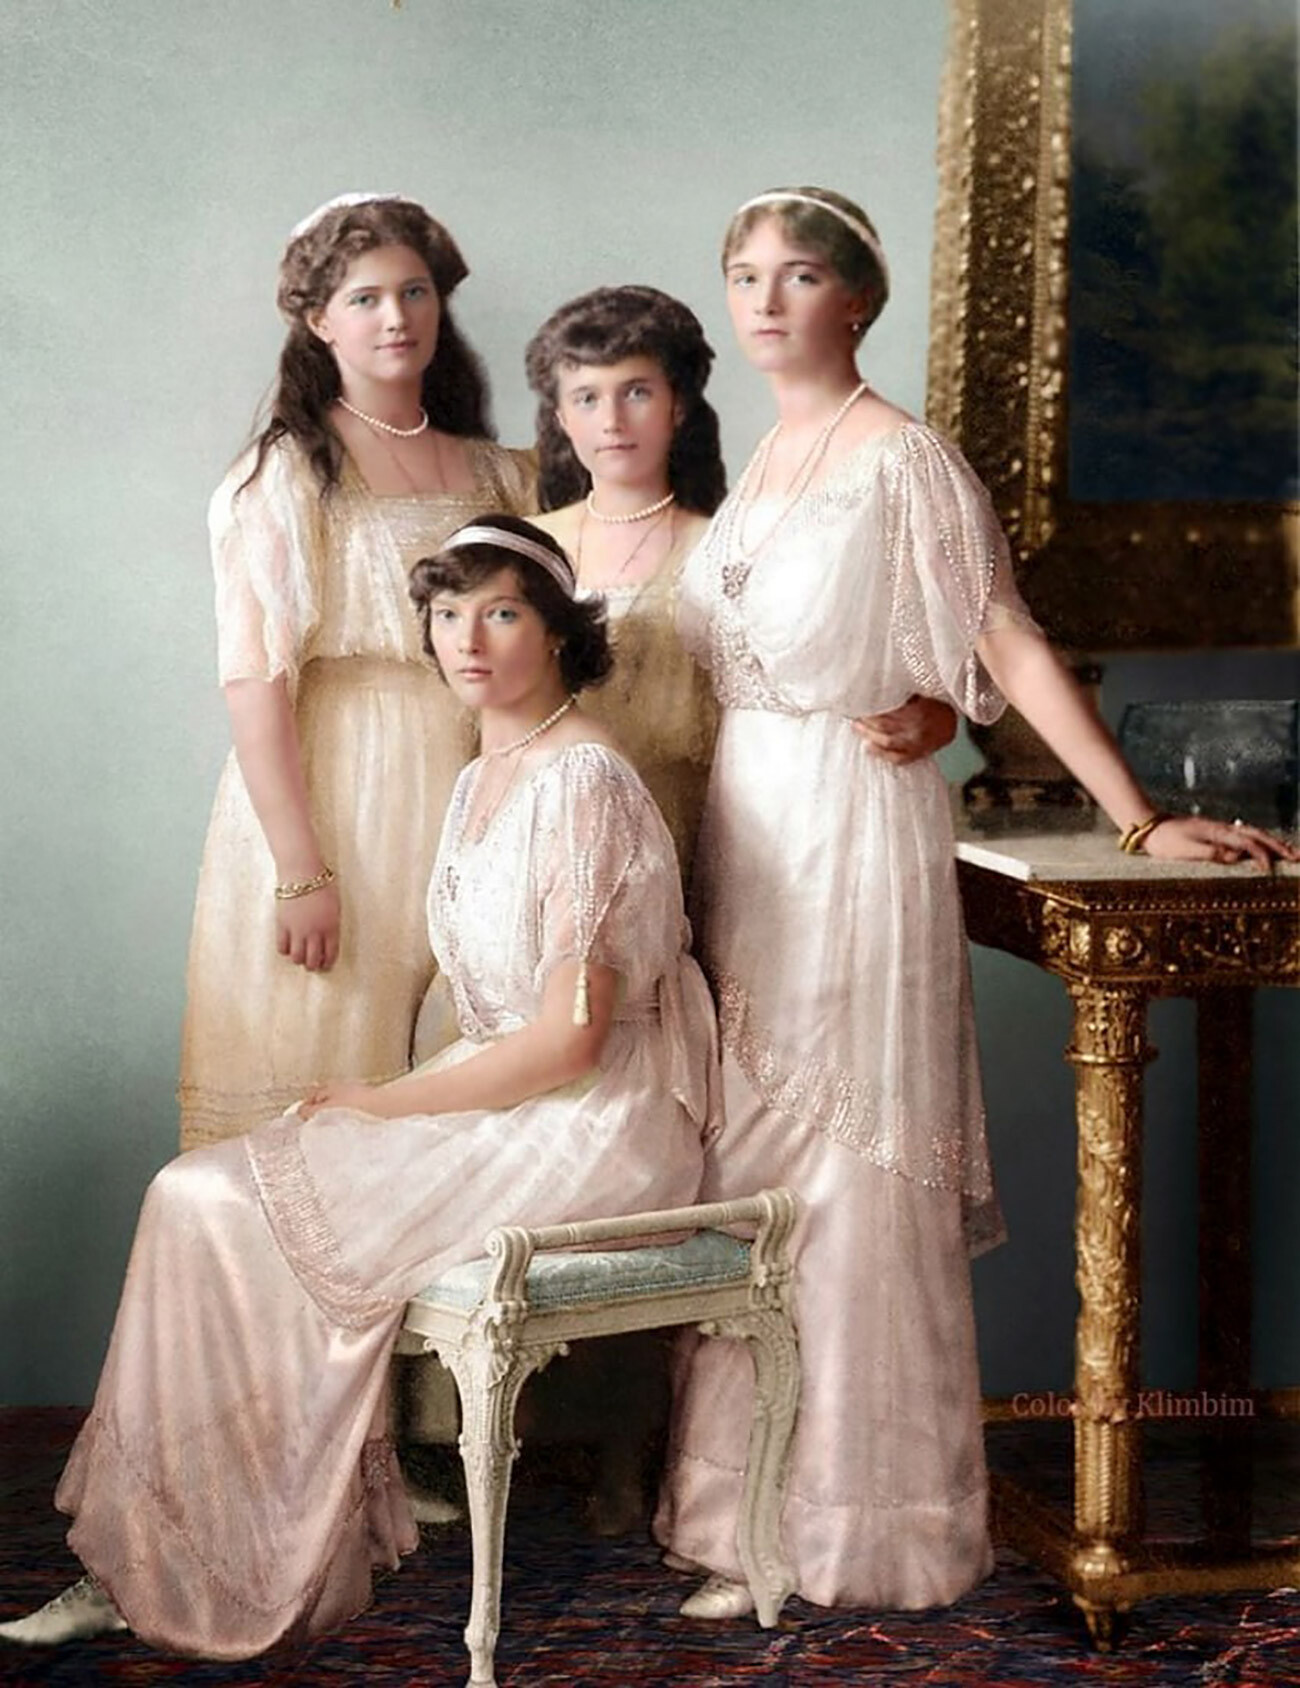 Standing: Maria, Anastasia, Olga; sitting - Tatiana